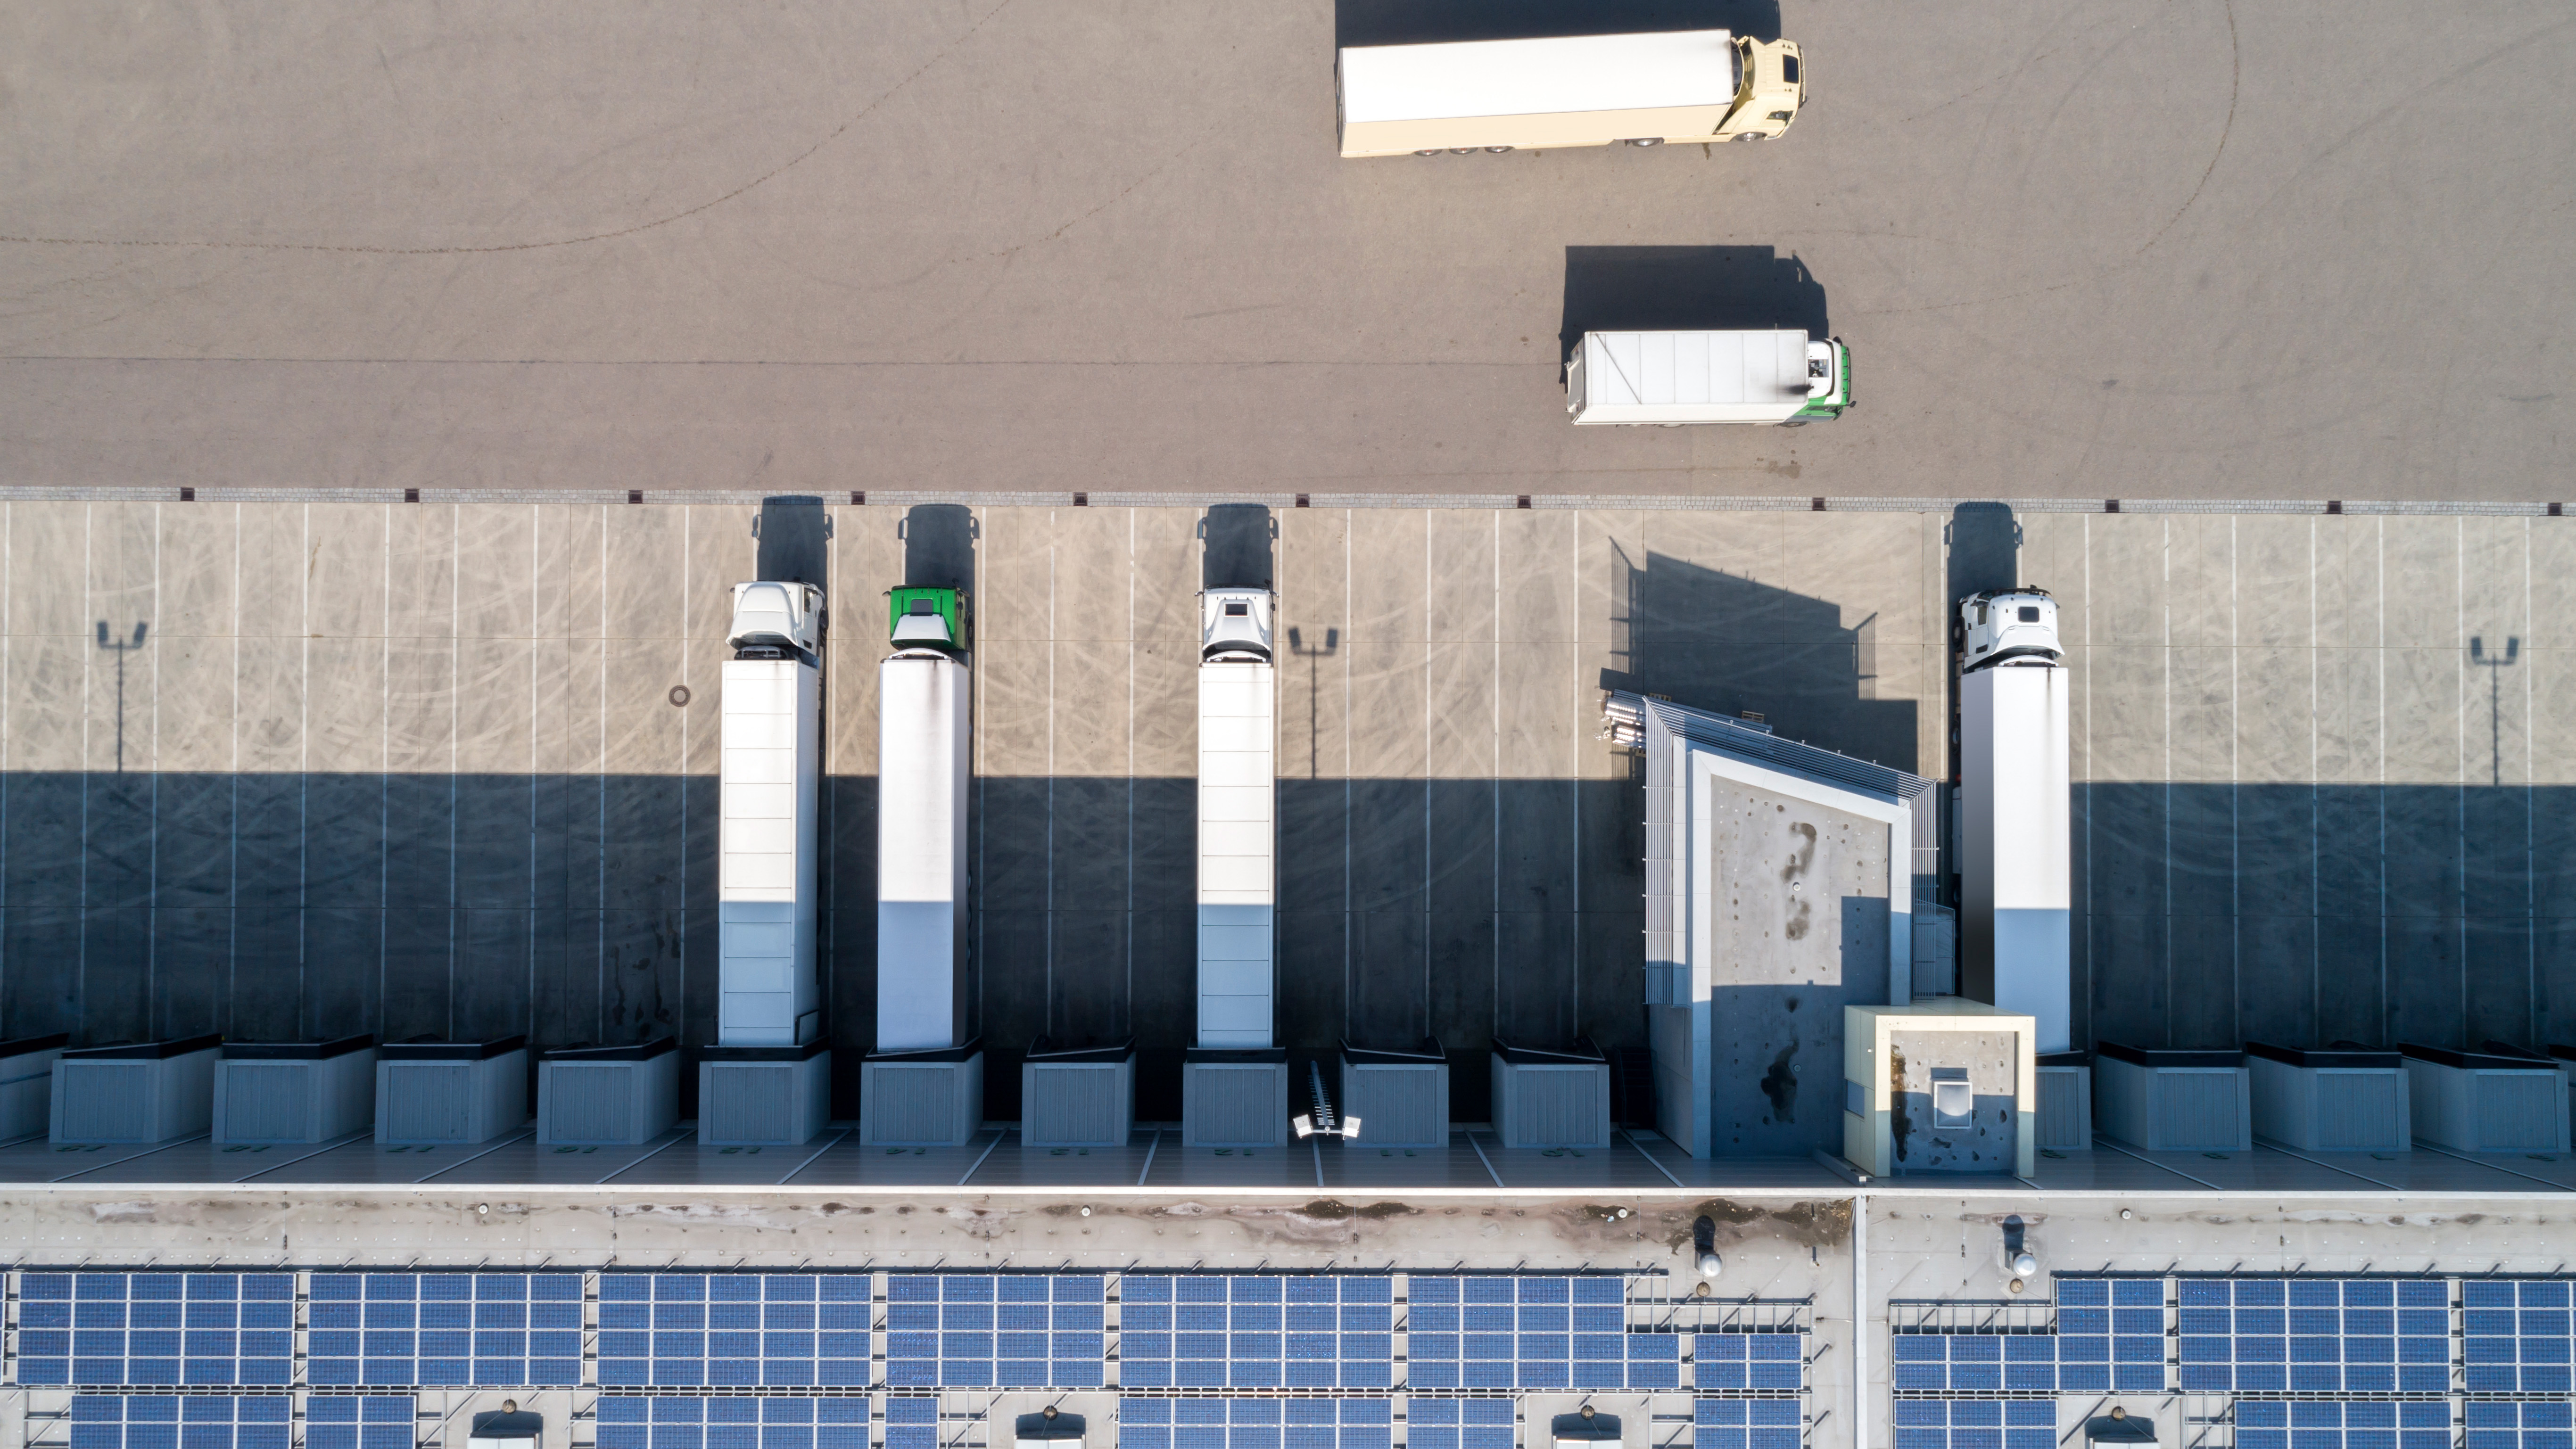 Aerial view of semi trucks at warehouse